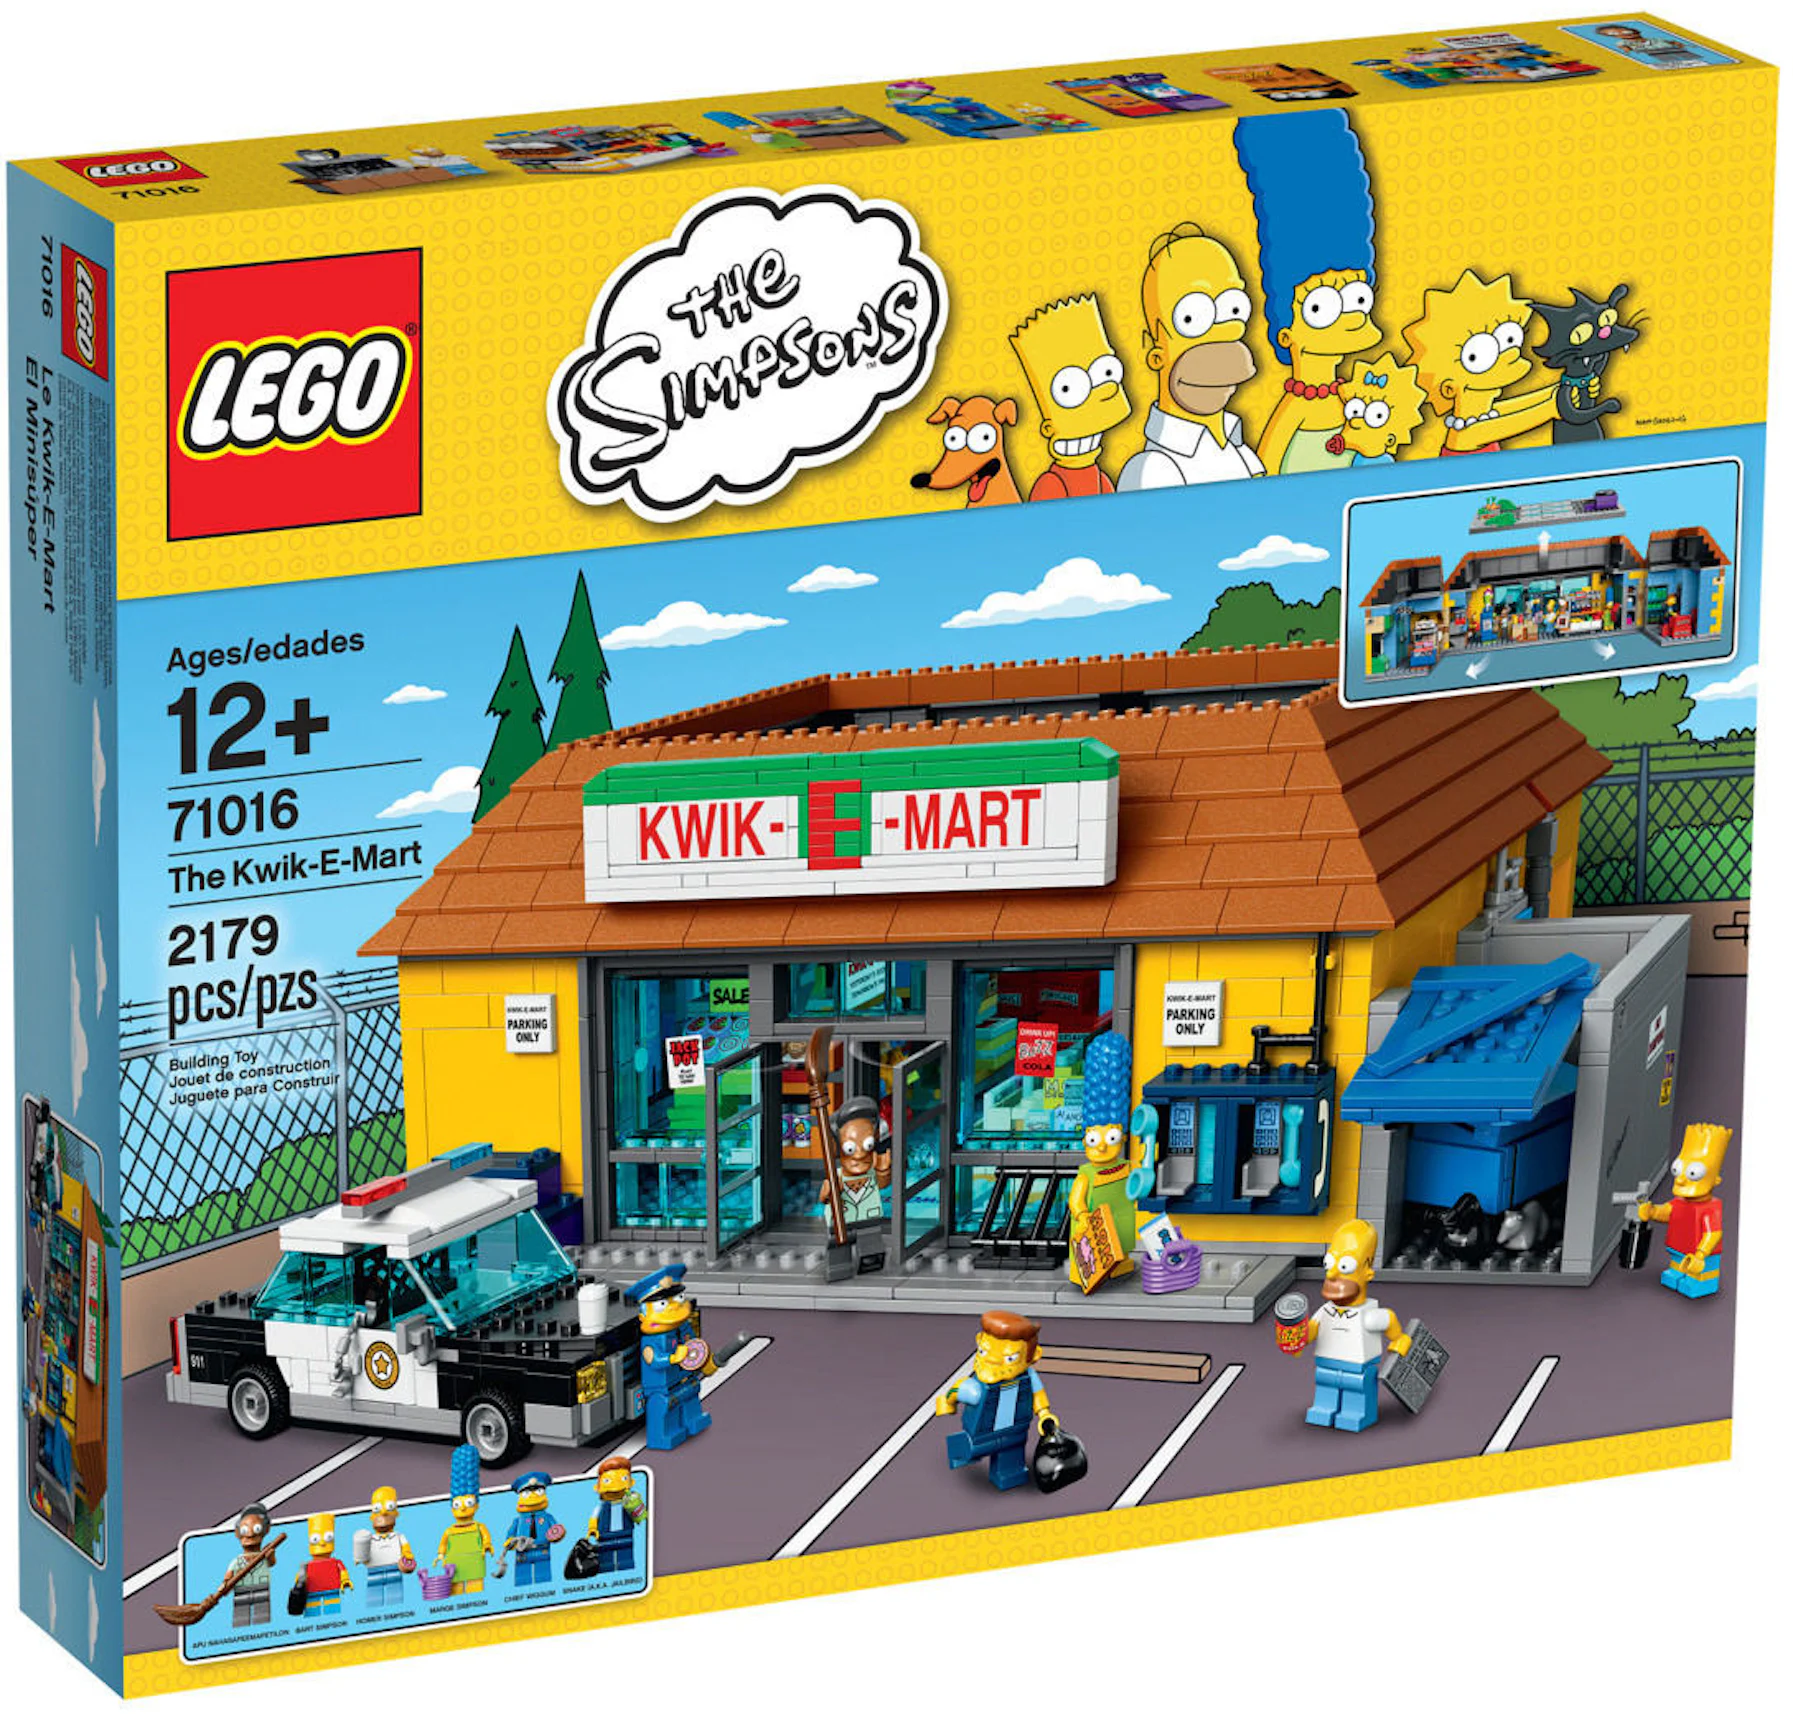 LEGO The Simpsons The Kwik-E Mart Set 71016